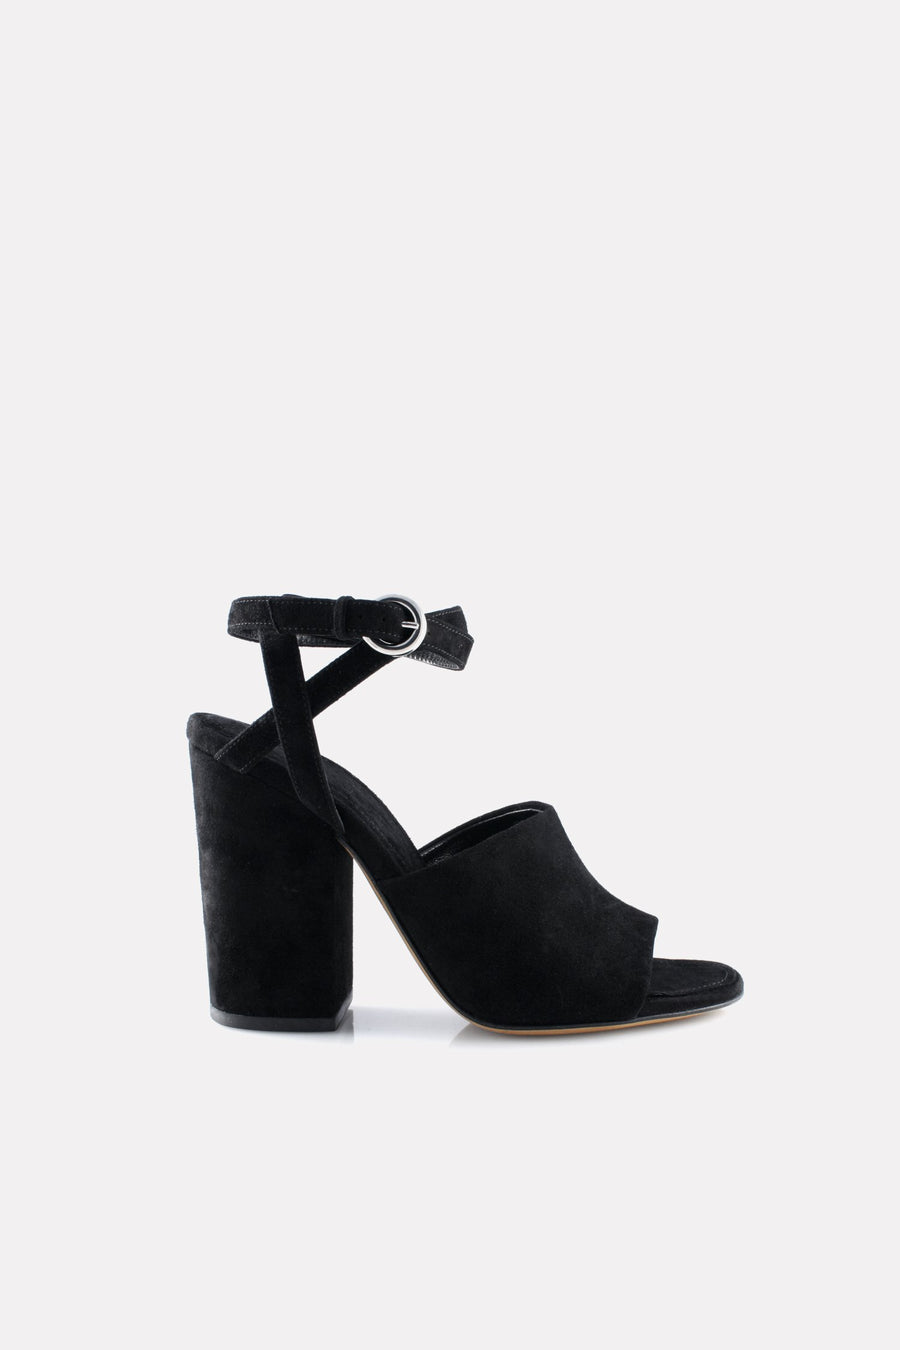 ARCHIVE SALE- Asymmetrical Ankle Wrap Block Heel Sandal Black Suede.